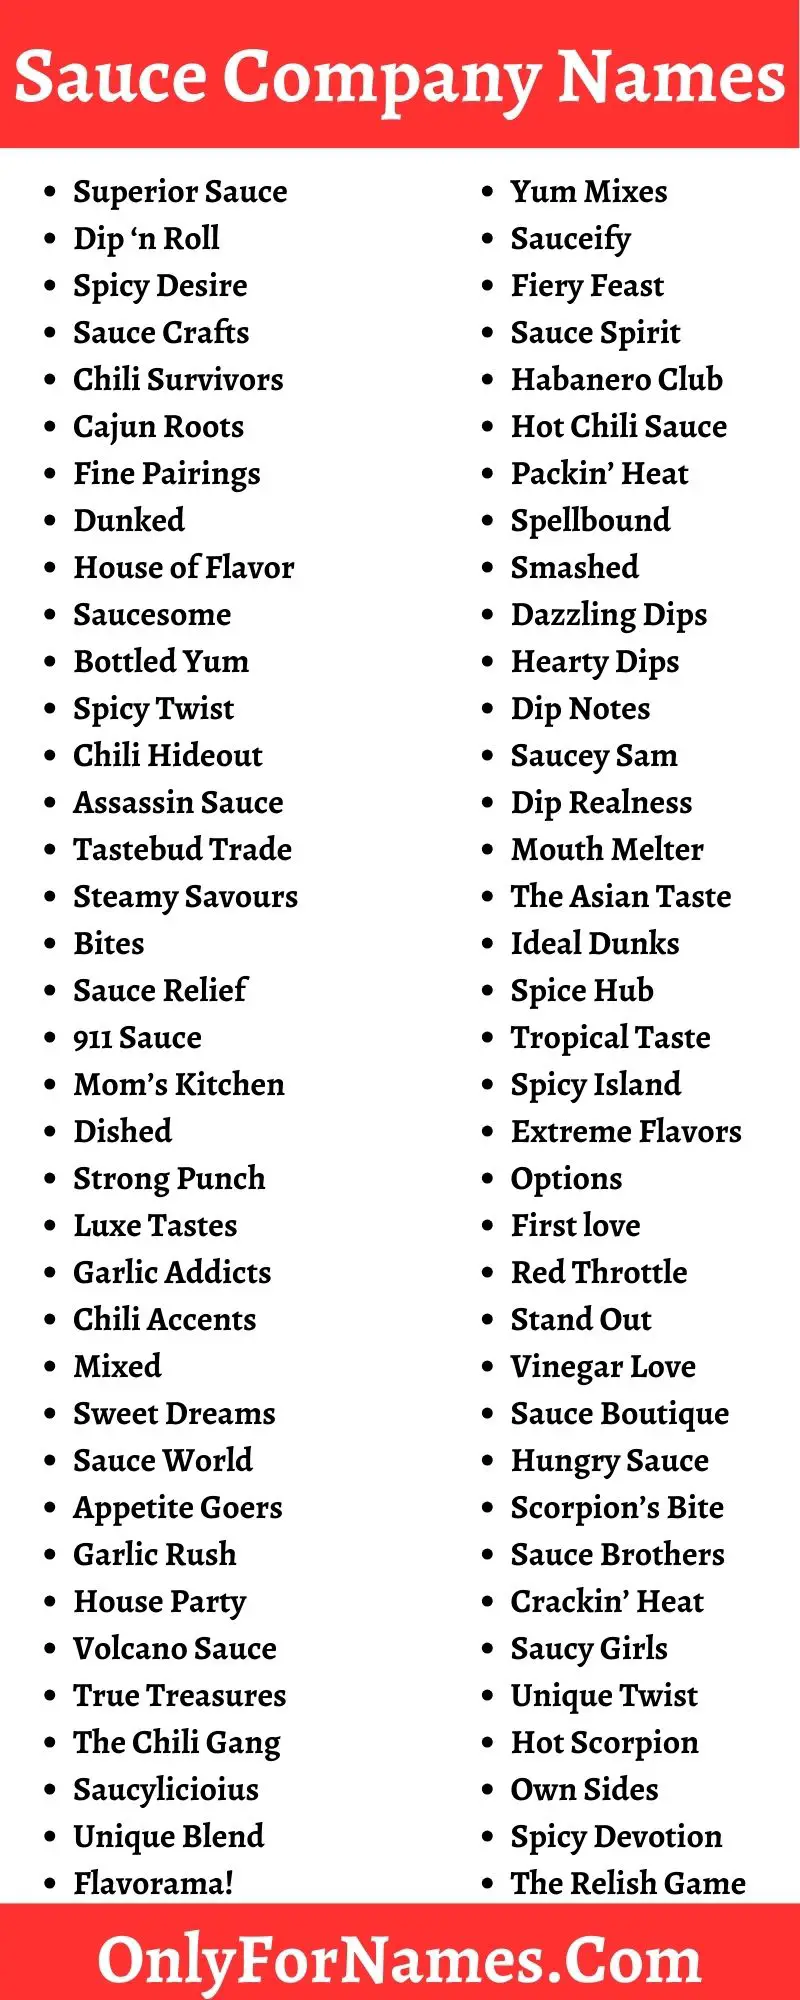 Sauce Company Names: 420+ Brand Names For Hot Chili Sauce